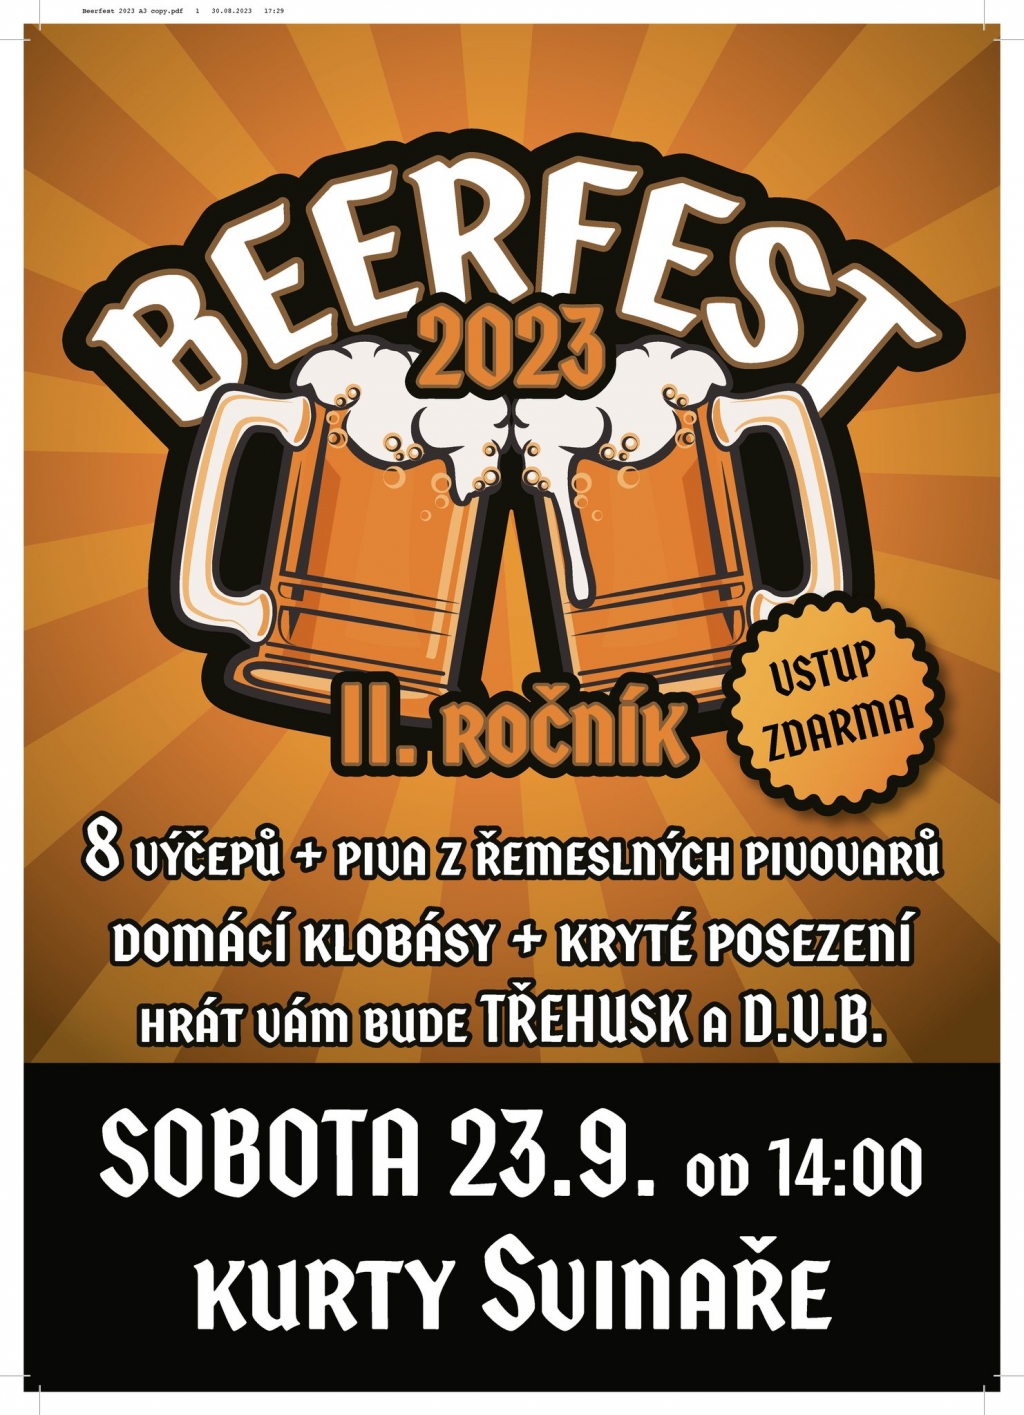 Beerfest Svinaře 2023